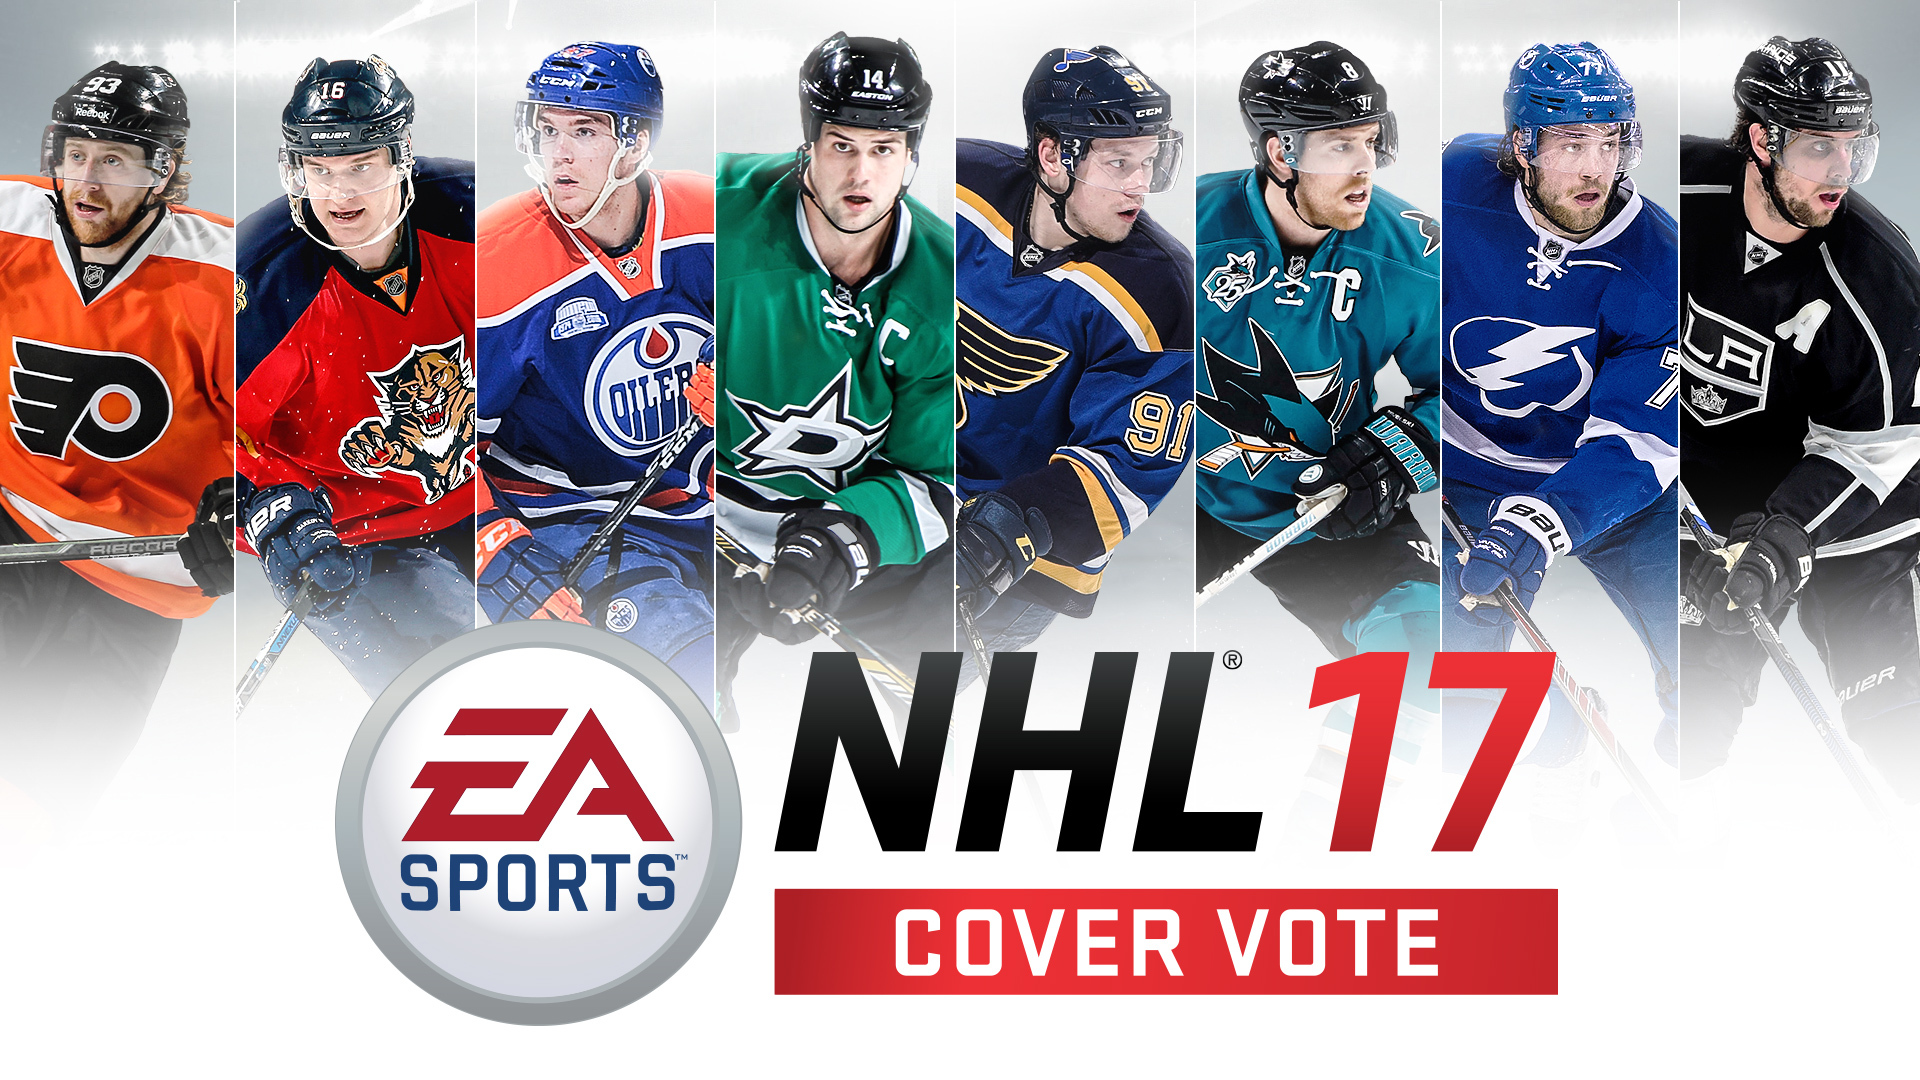 EA SPORTS NHL® 17 Cover Vote Begins 